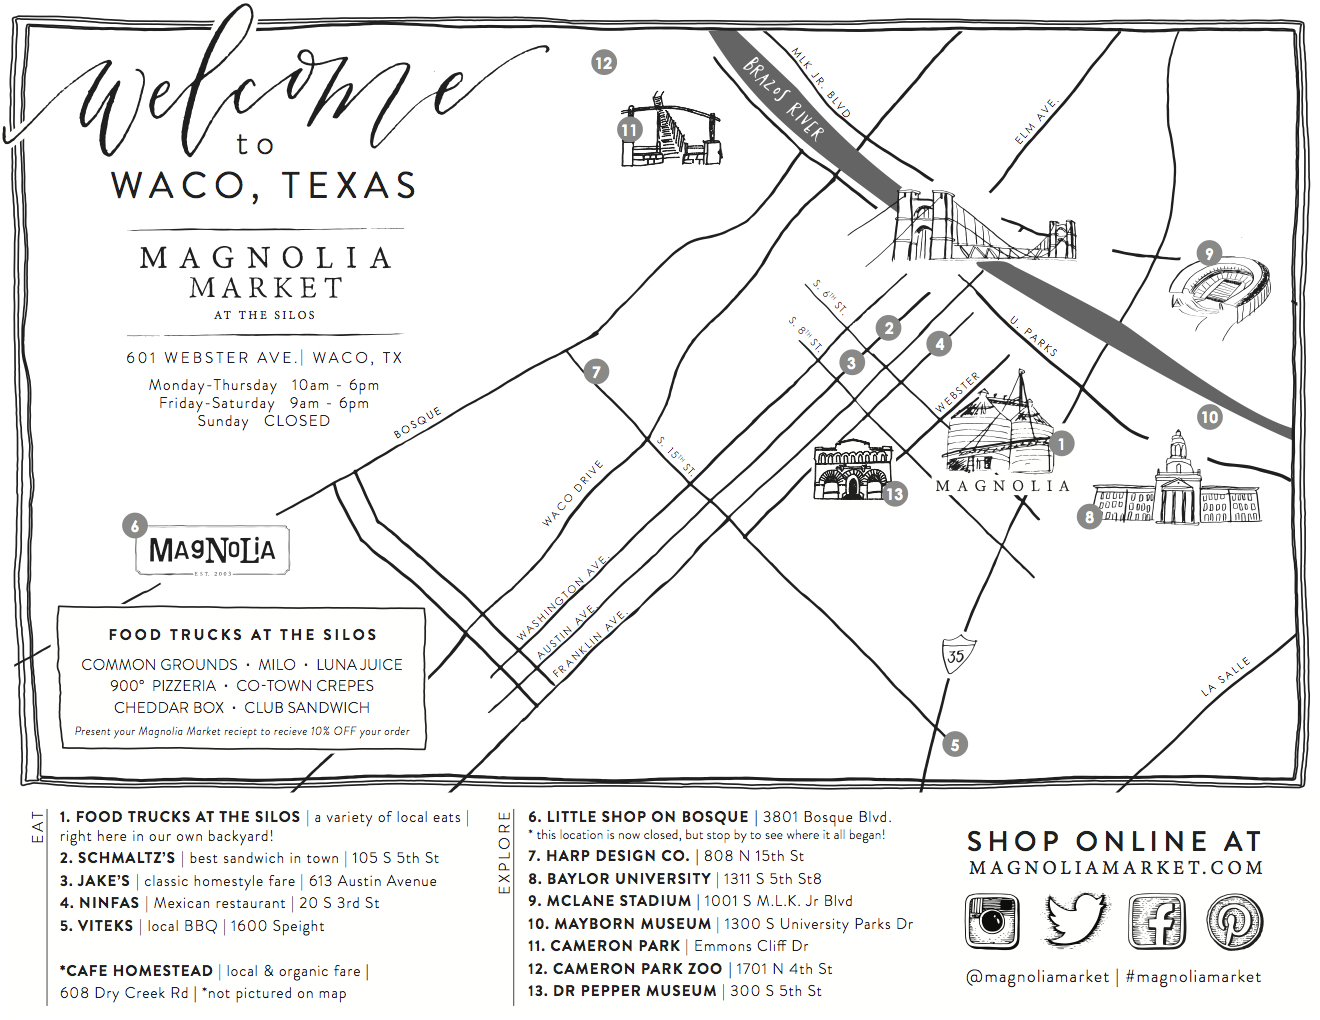 Visit The Silos - Magnolia Market - Magnolia Texas Map